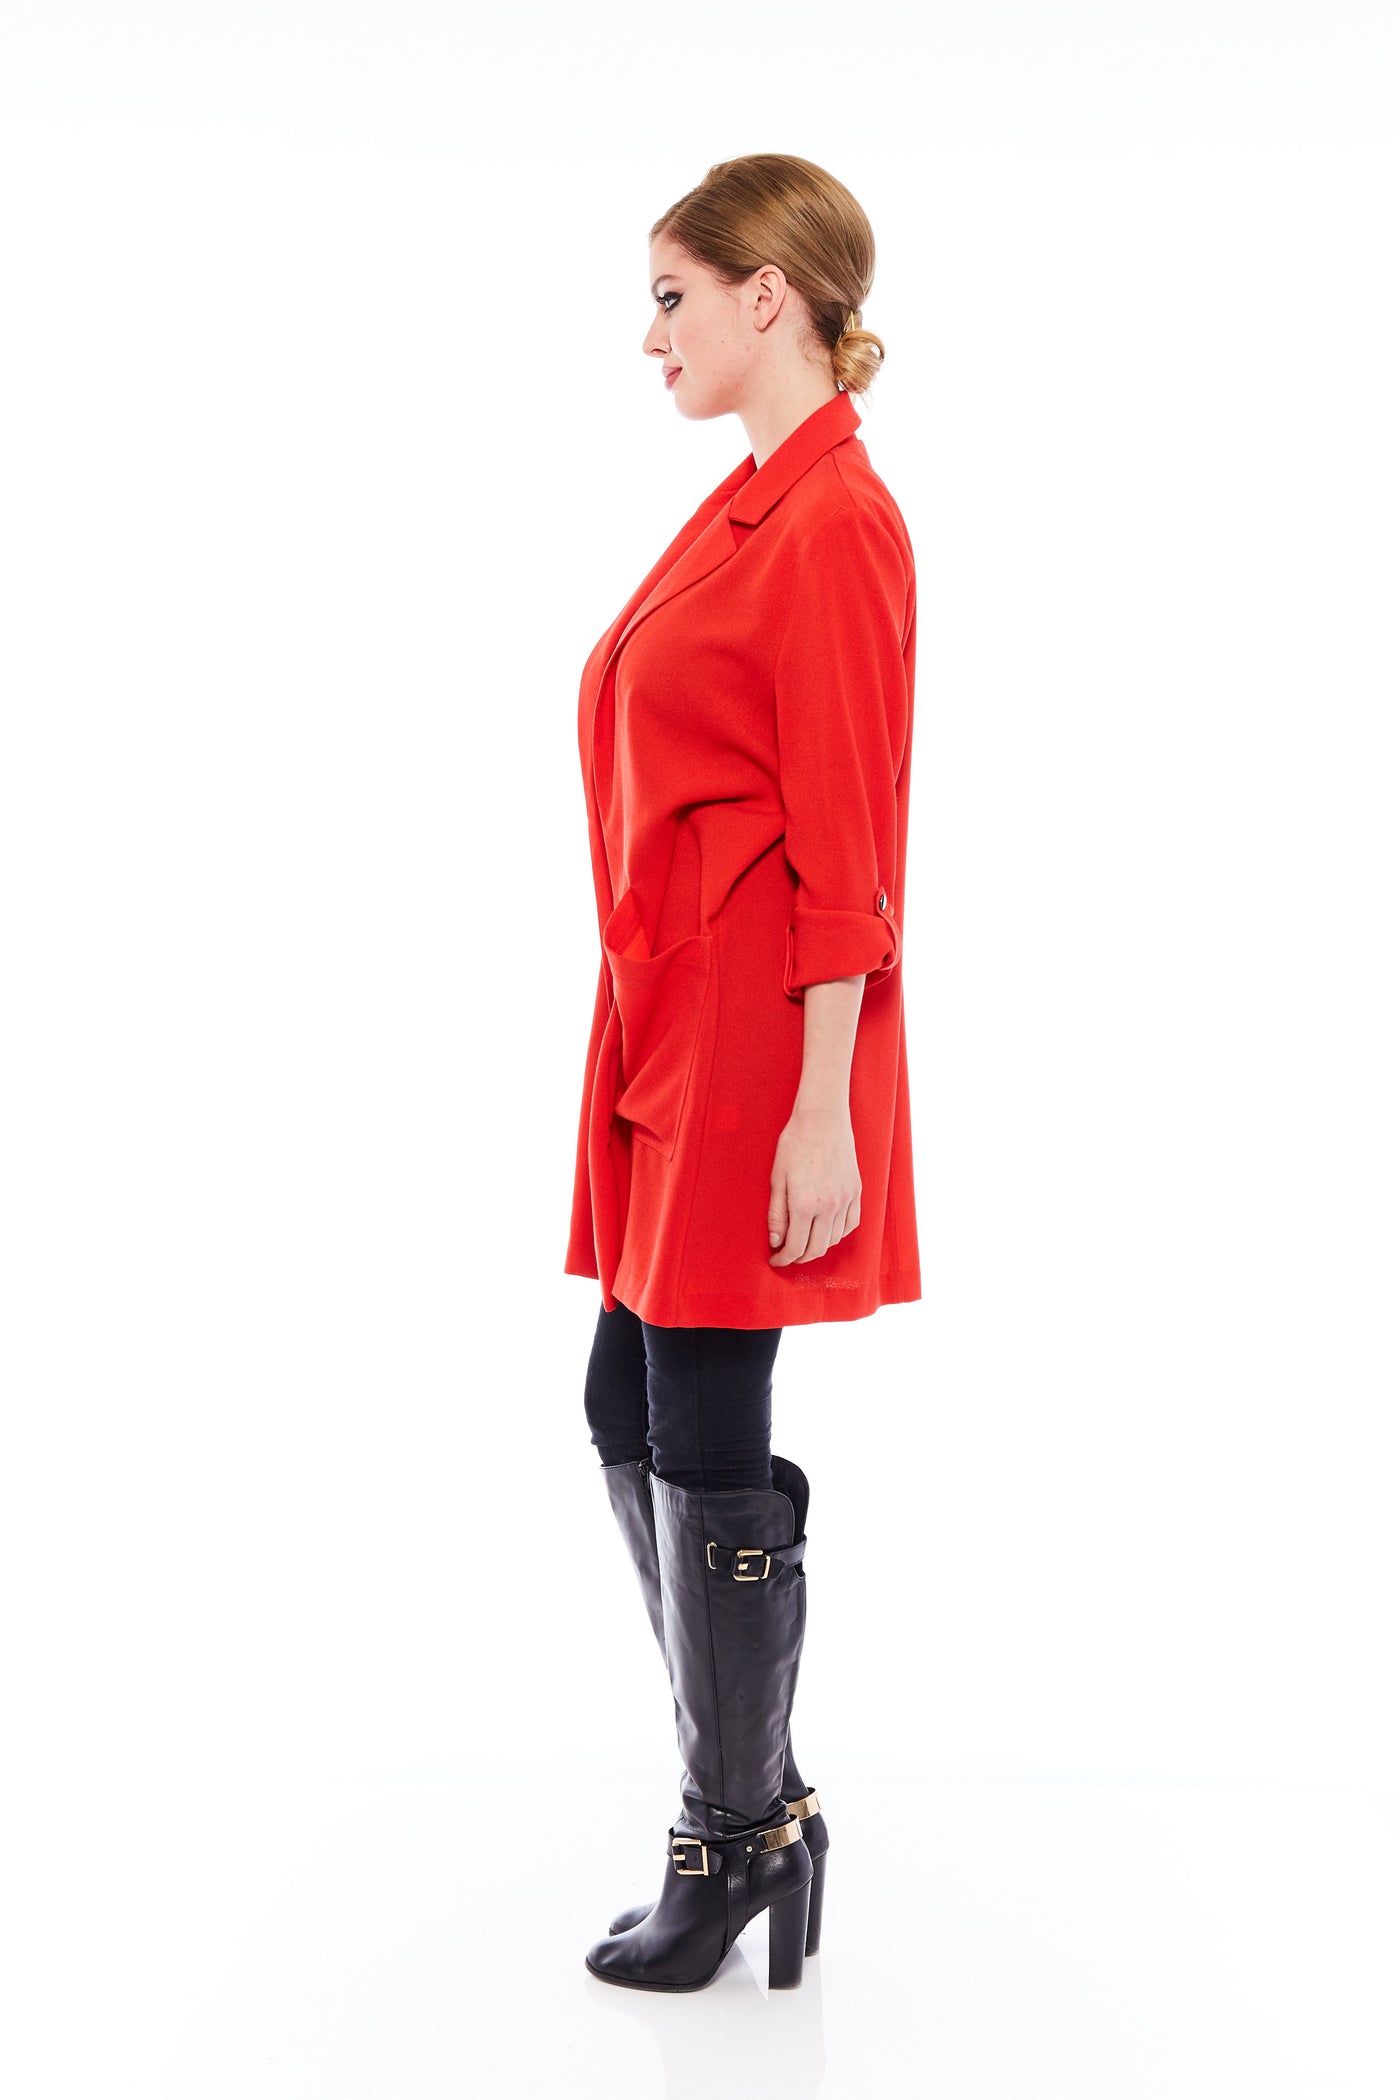 Buy Women's Long Sleeve Red Blazers Online